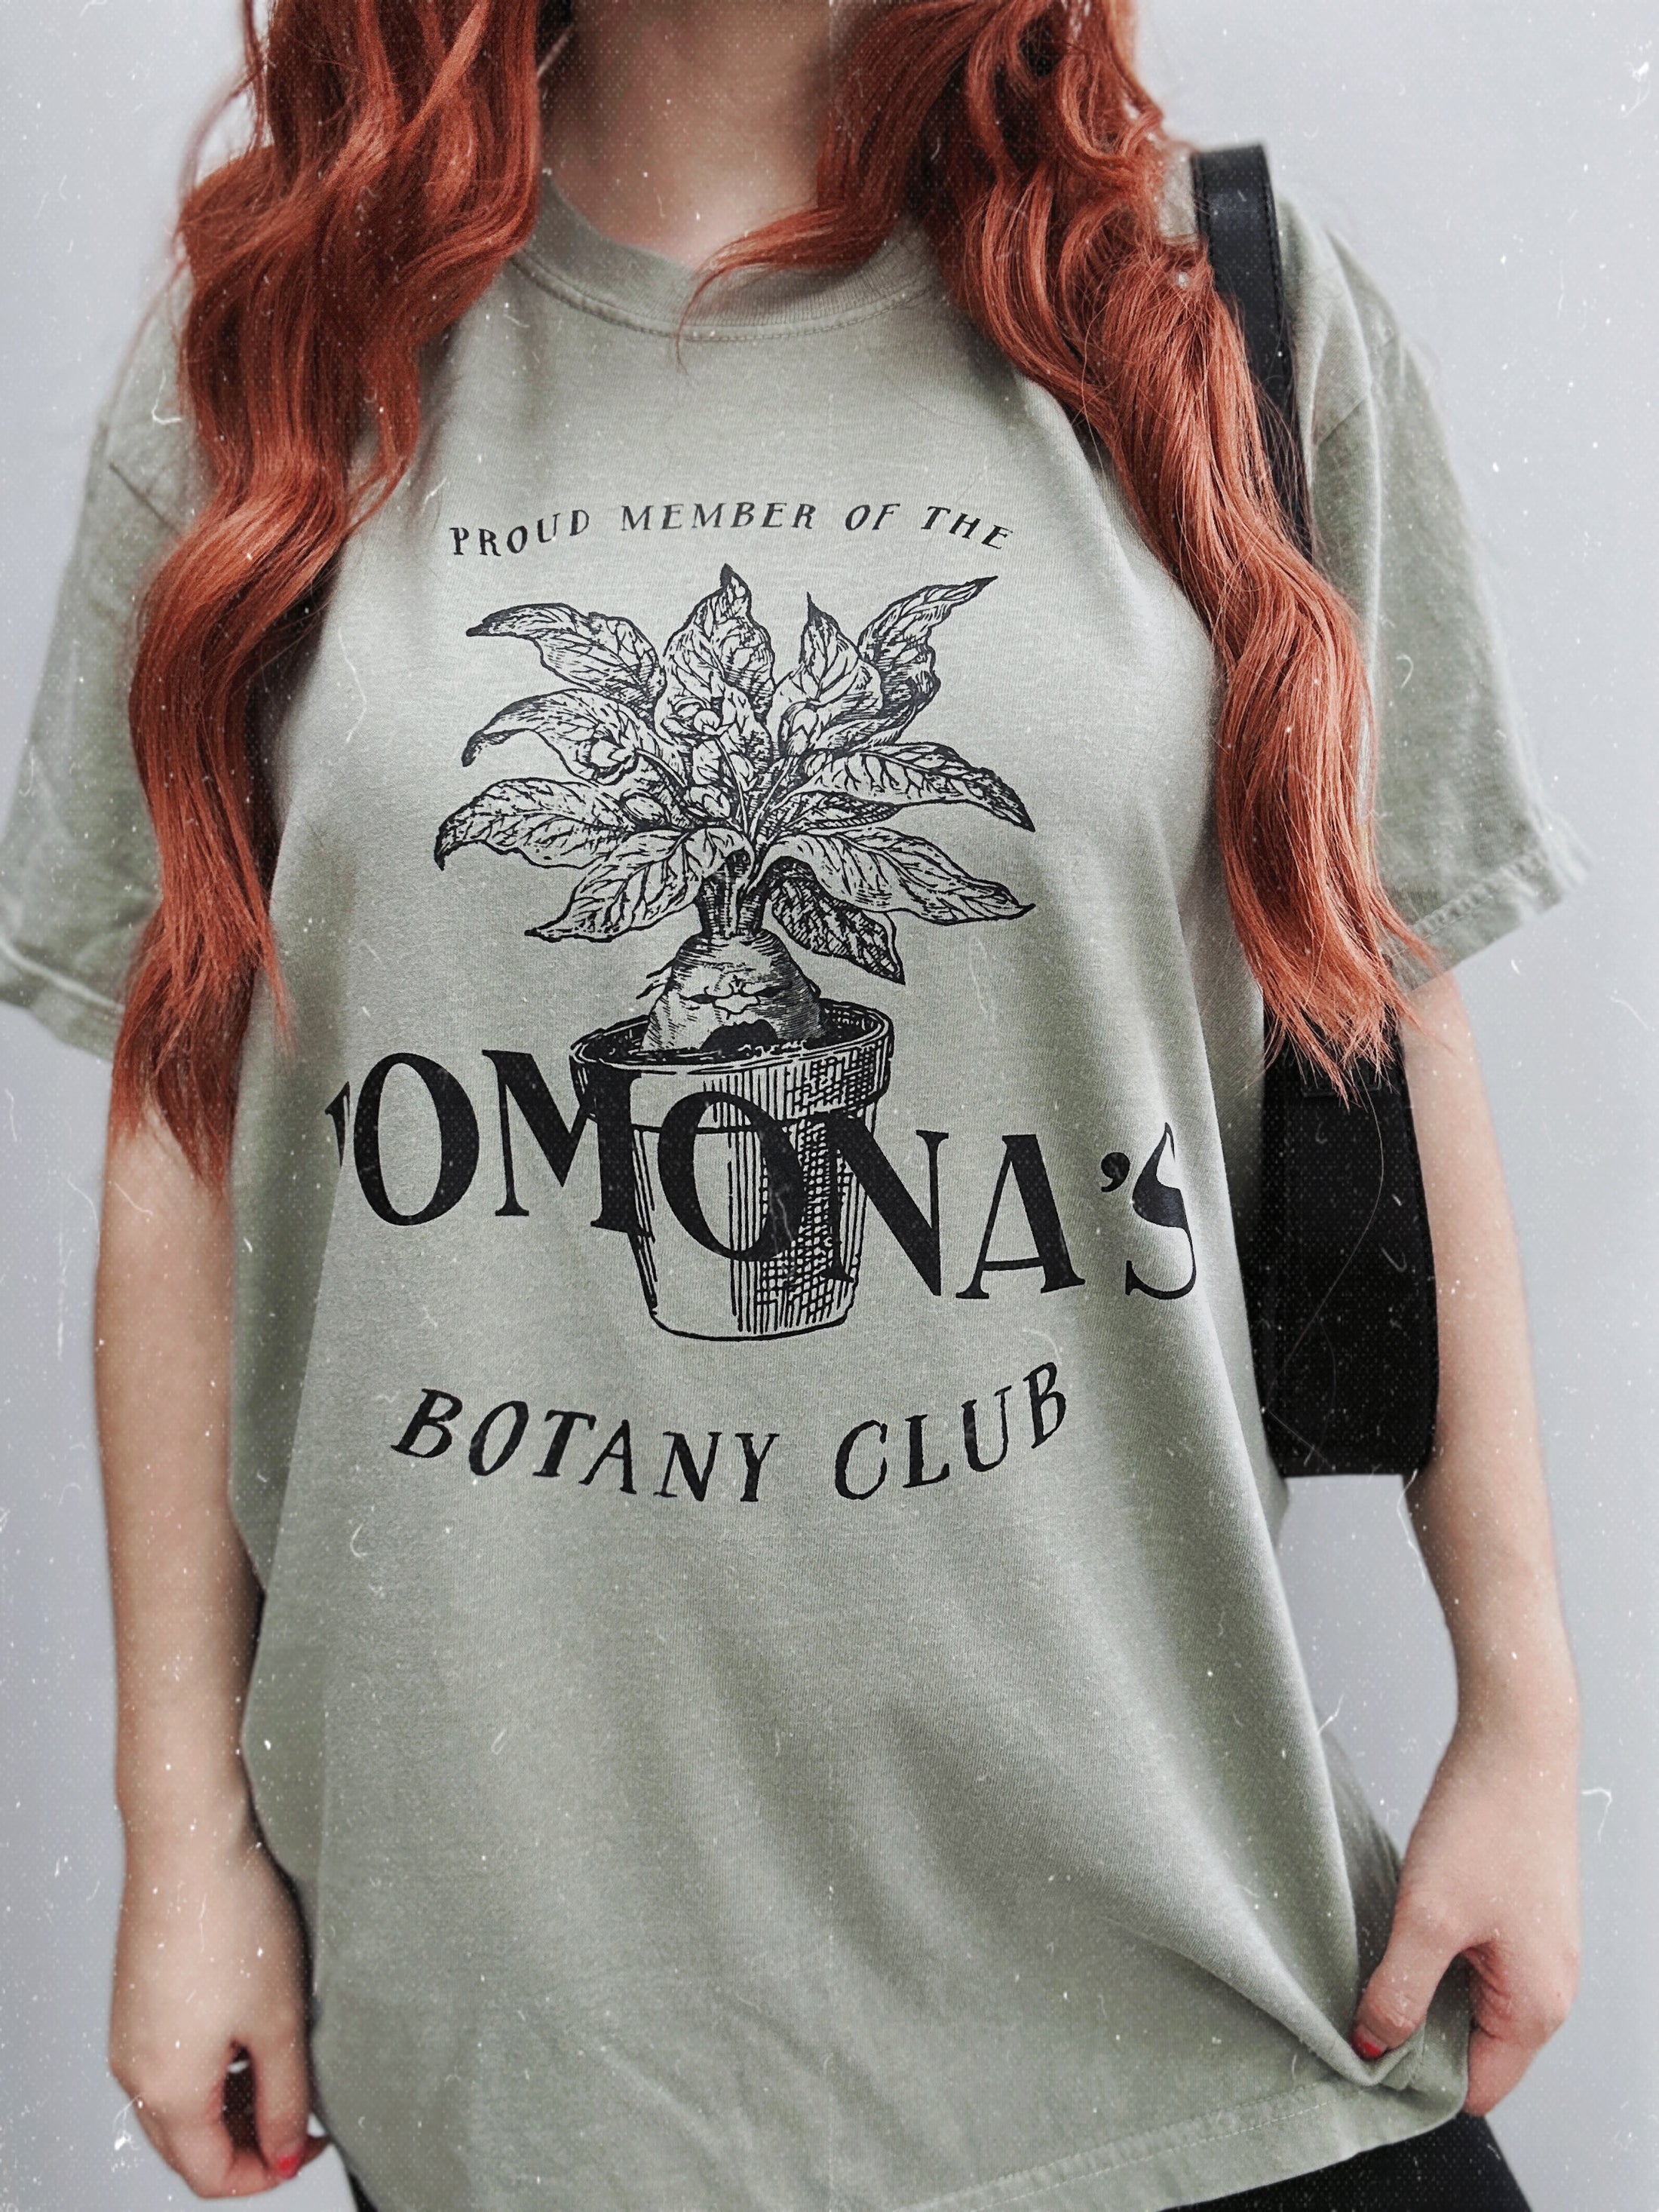 Pomona's Botany Club Tee